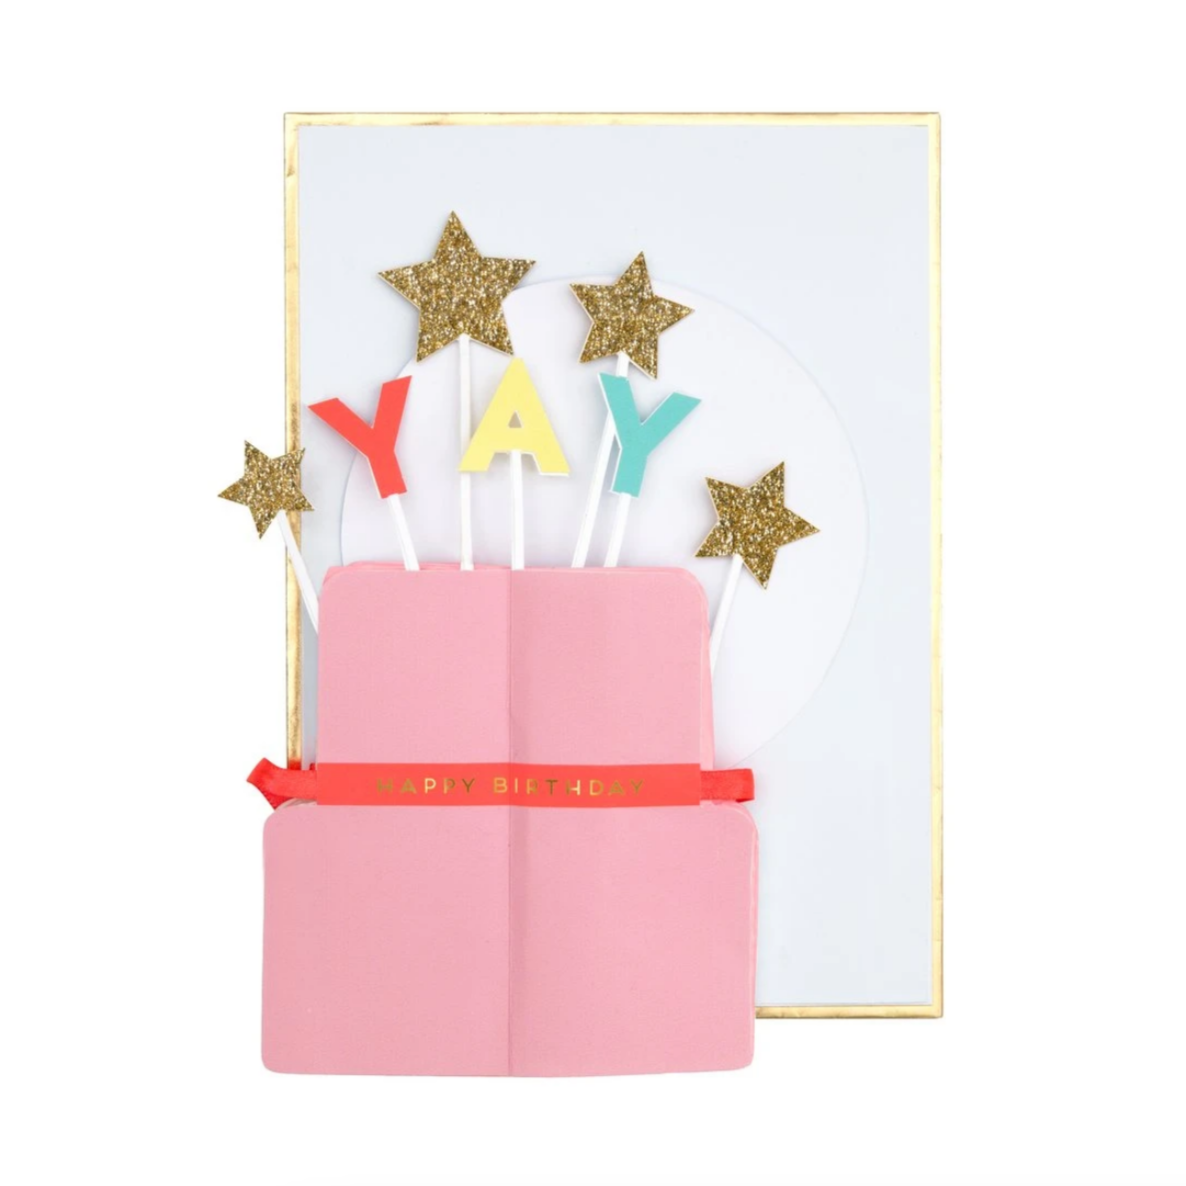 Yay! Cake Stand-Up Card -birthday